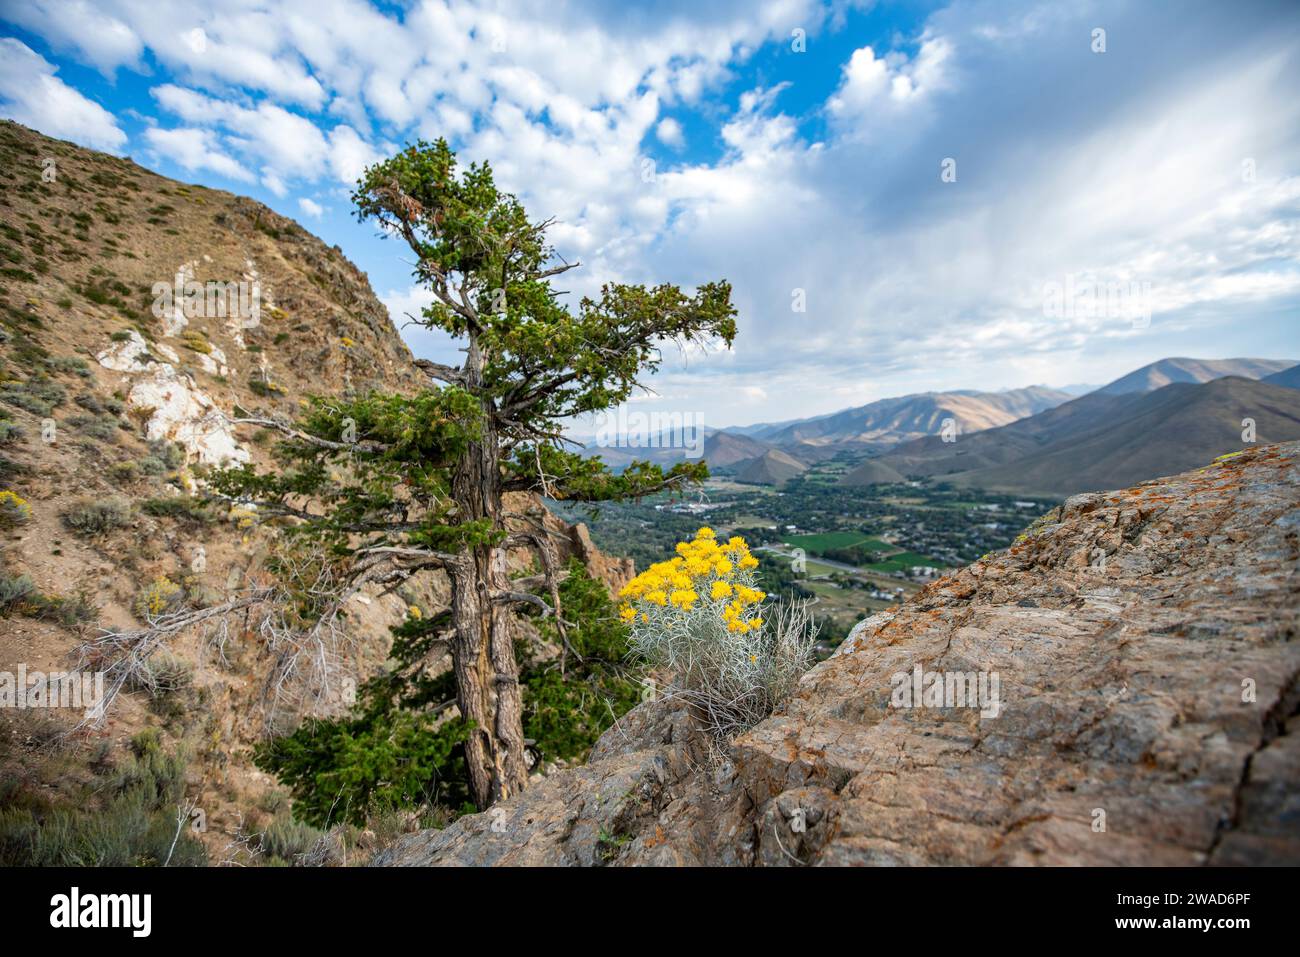 USA, Idaho, Hailey, Wildflowers and tree along Carbonate Mountain trail Stock Photo